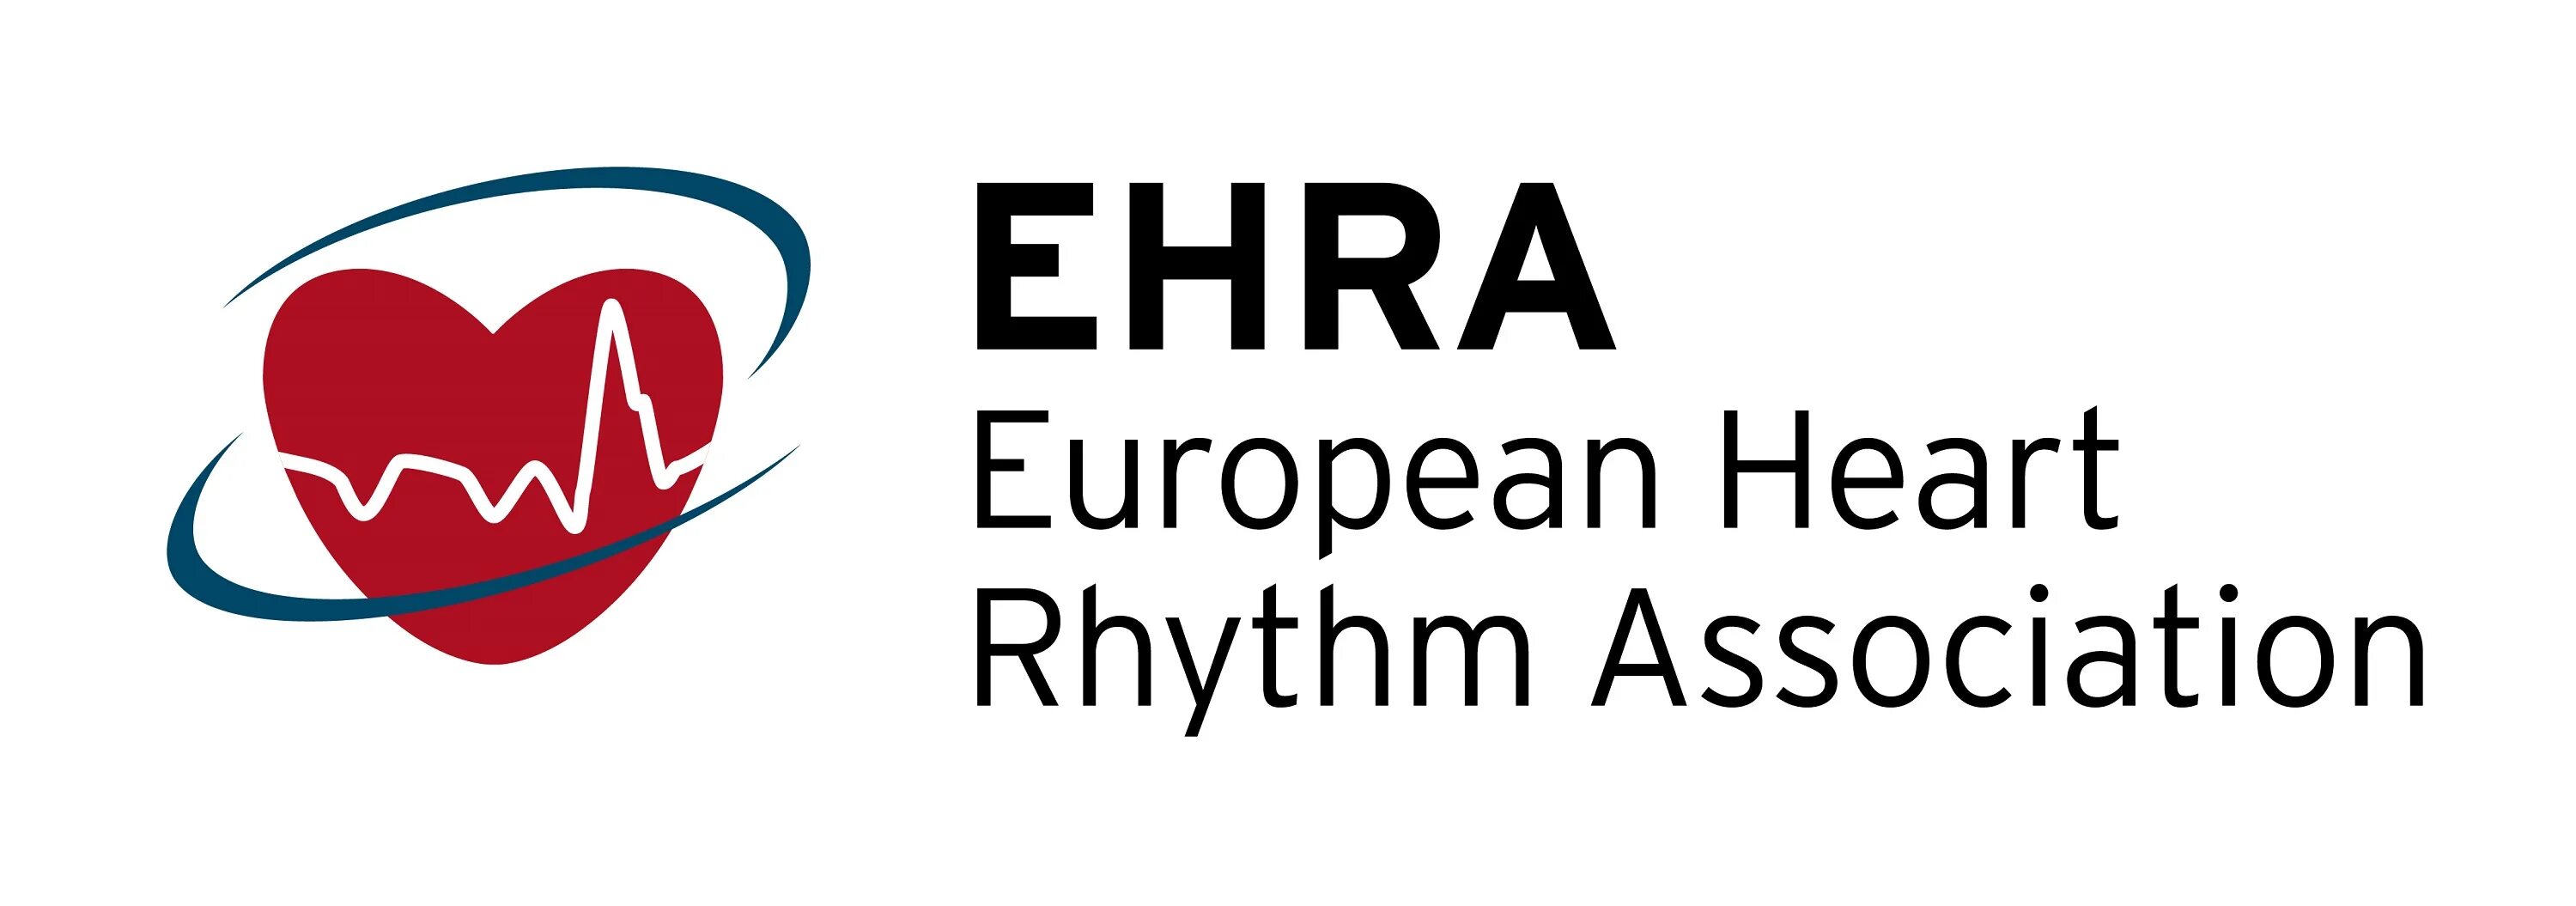 European society. Ehra в кардиологии. European Heart Rhythm Association. Ehra шкала. Ehra European Heart.